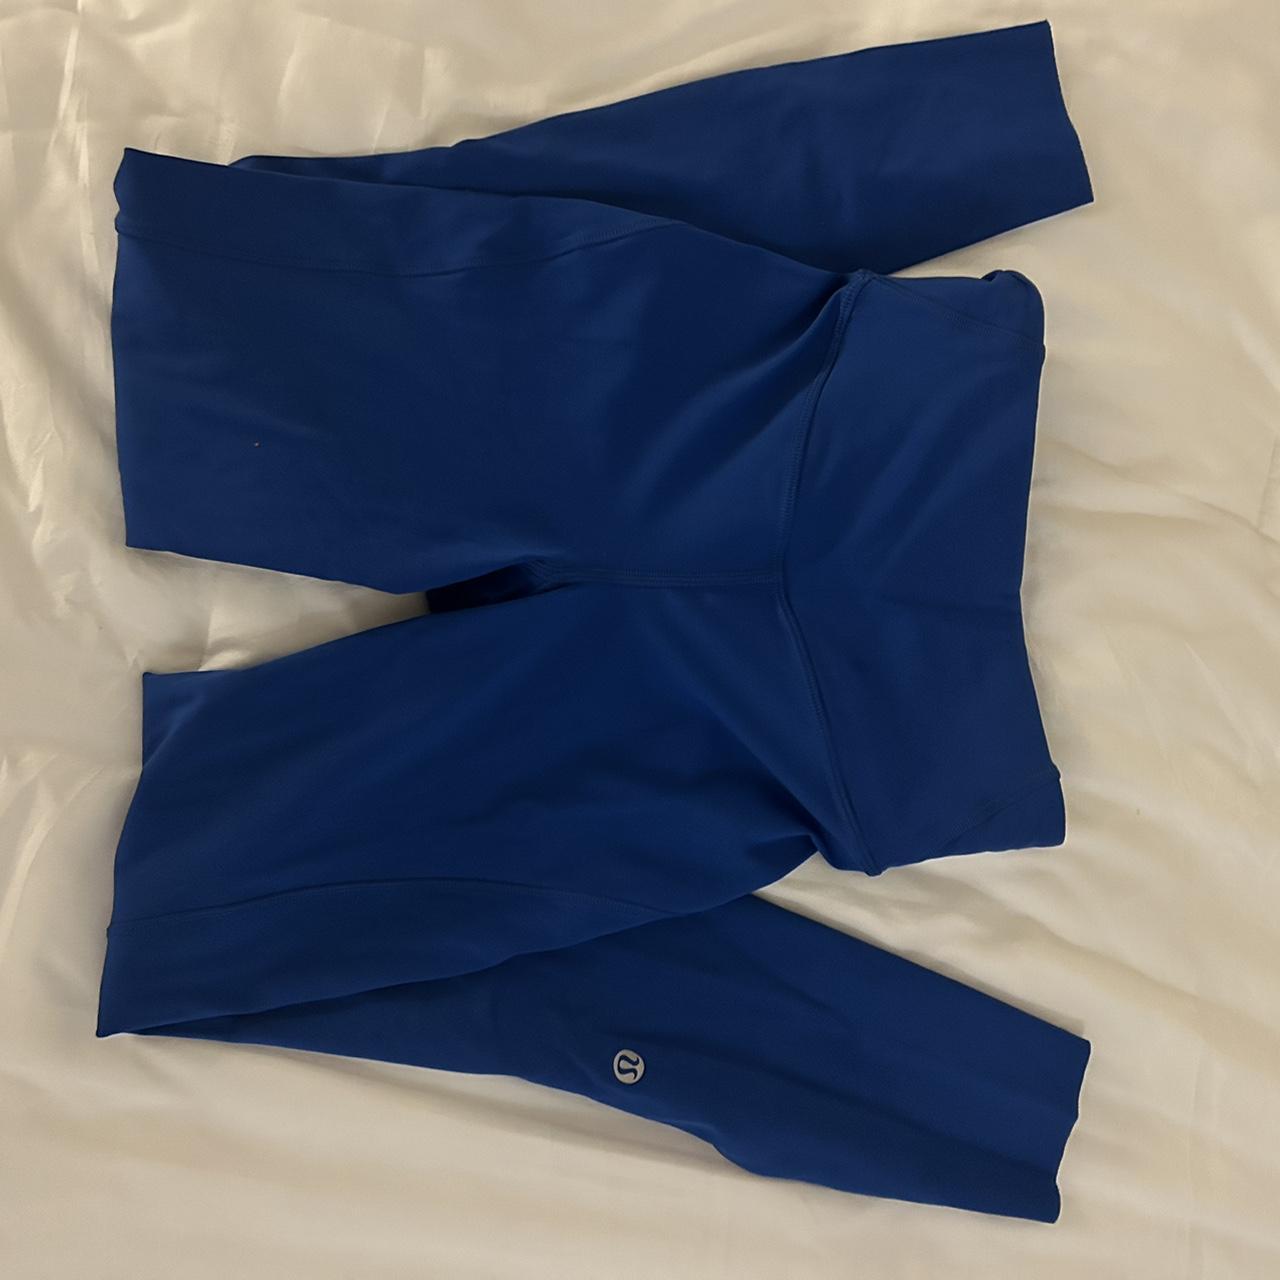 lululemon leggings color symphony blue size 2 - Depop